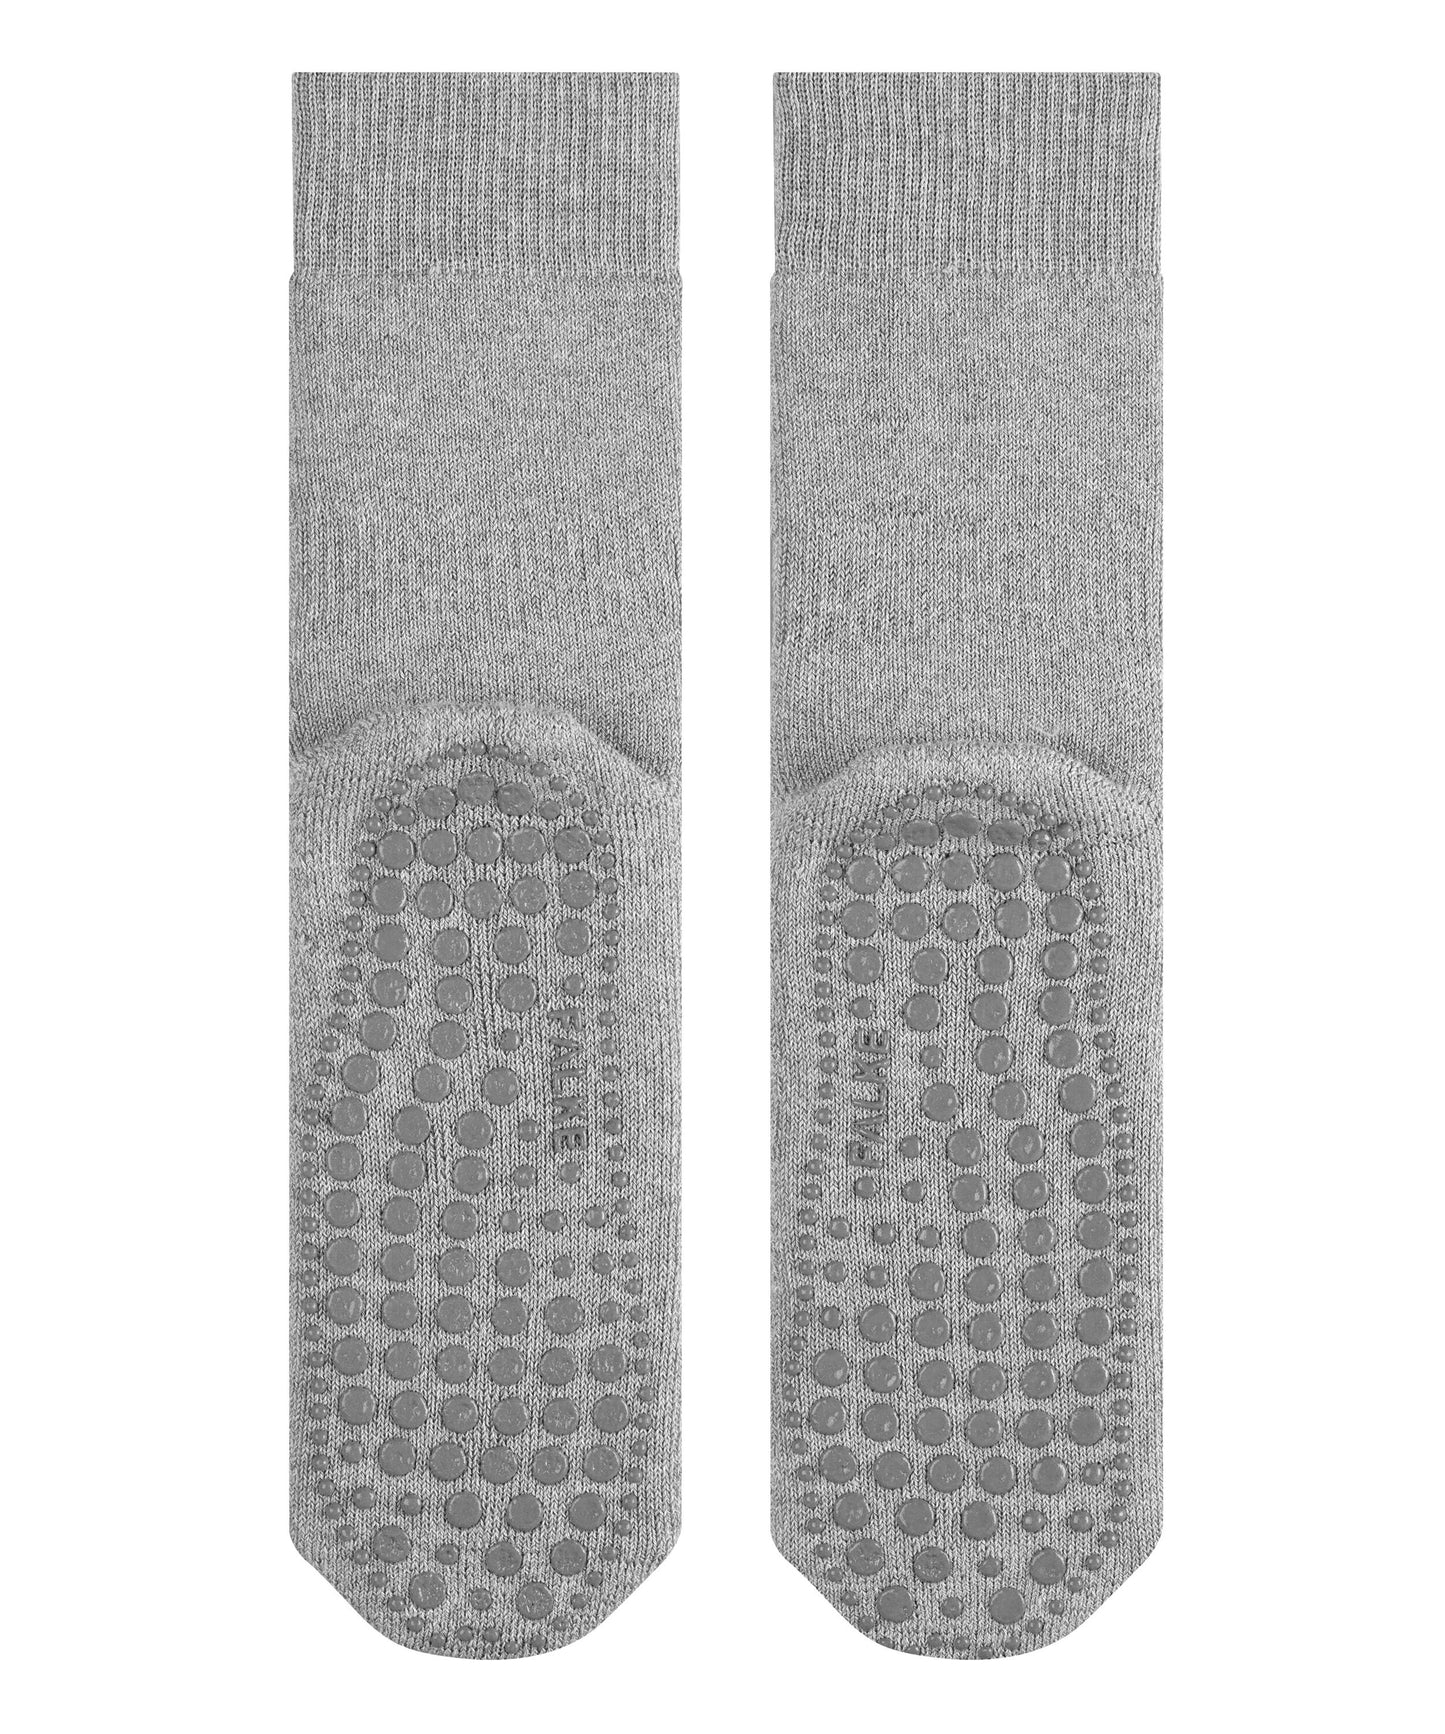 Socken Homepads (Light Grey)